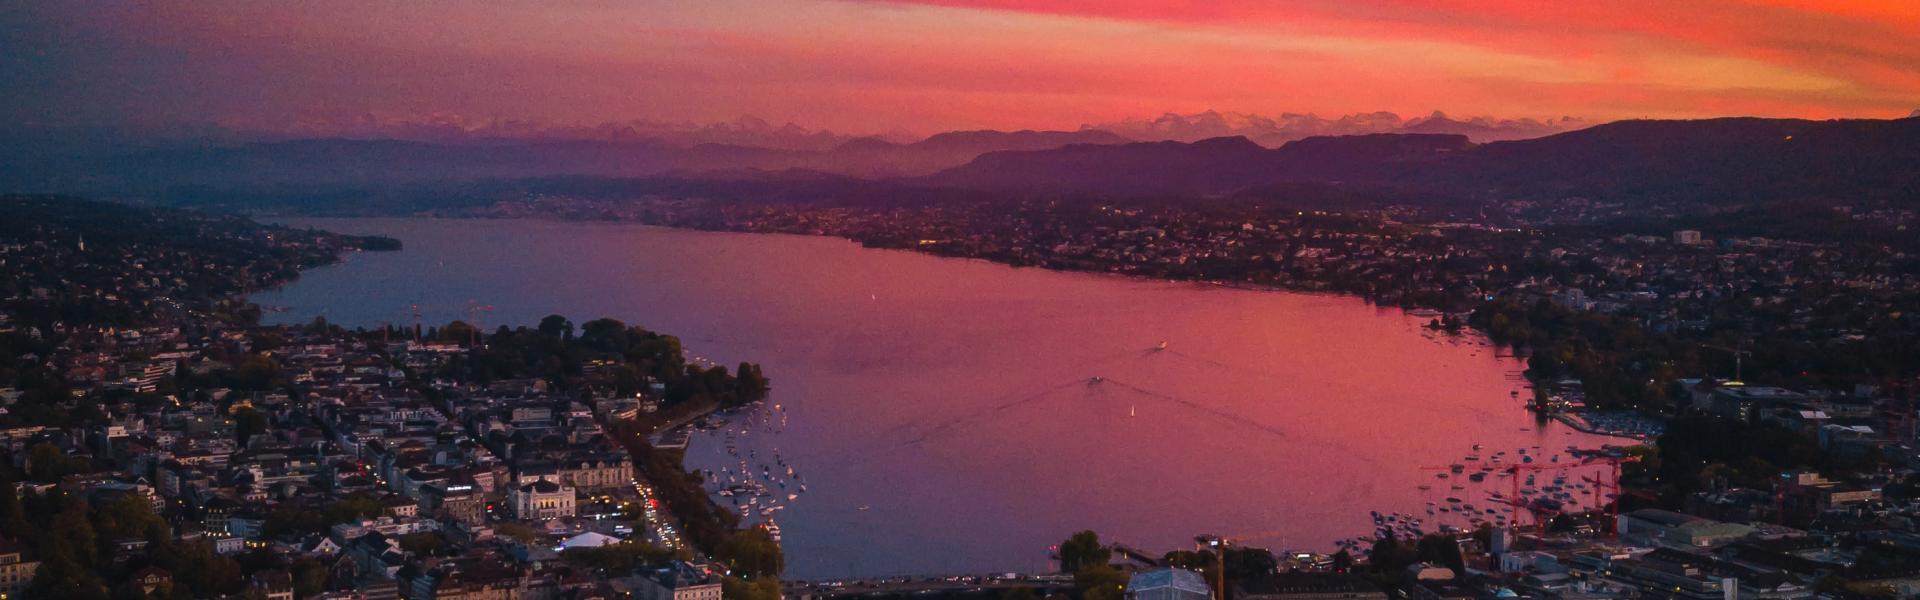 Lake Zurich Scenic View